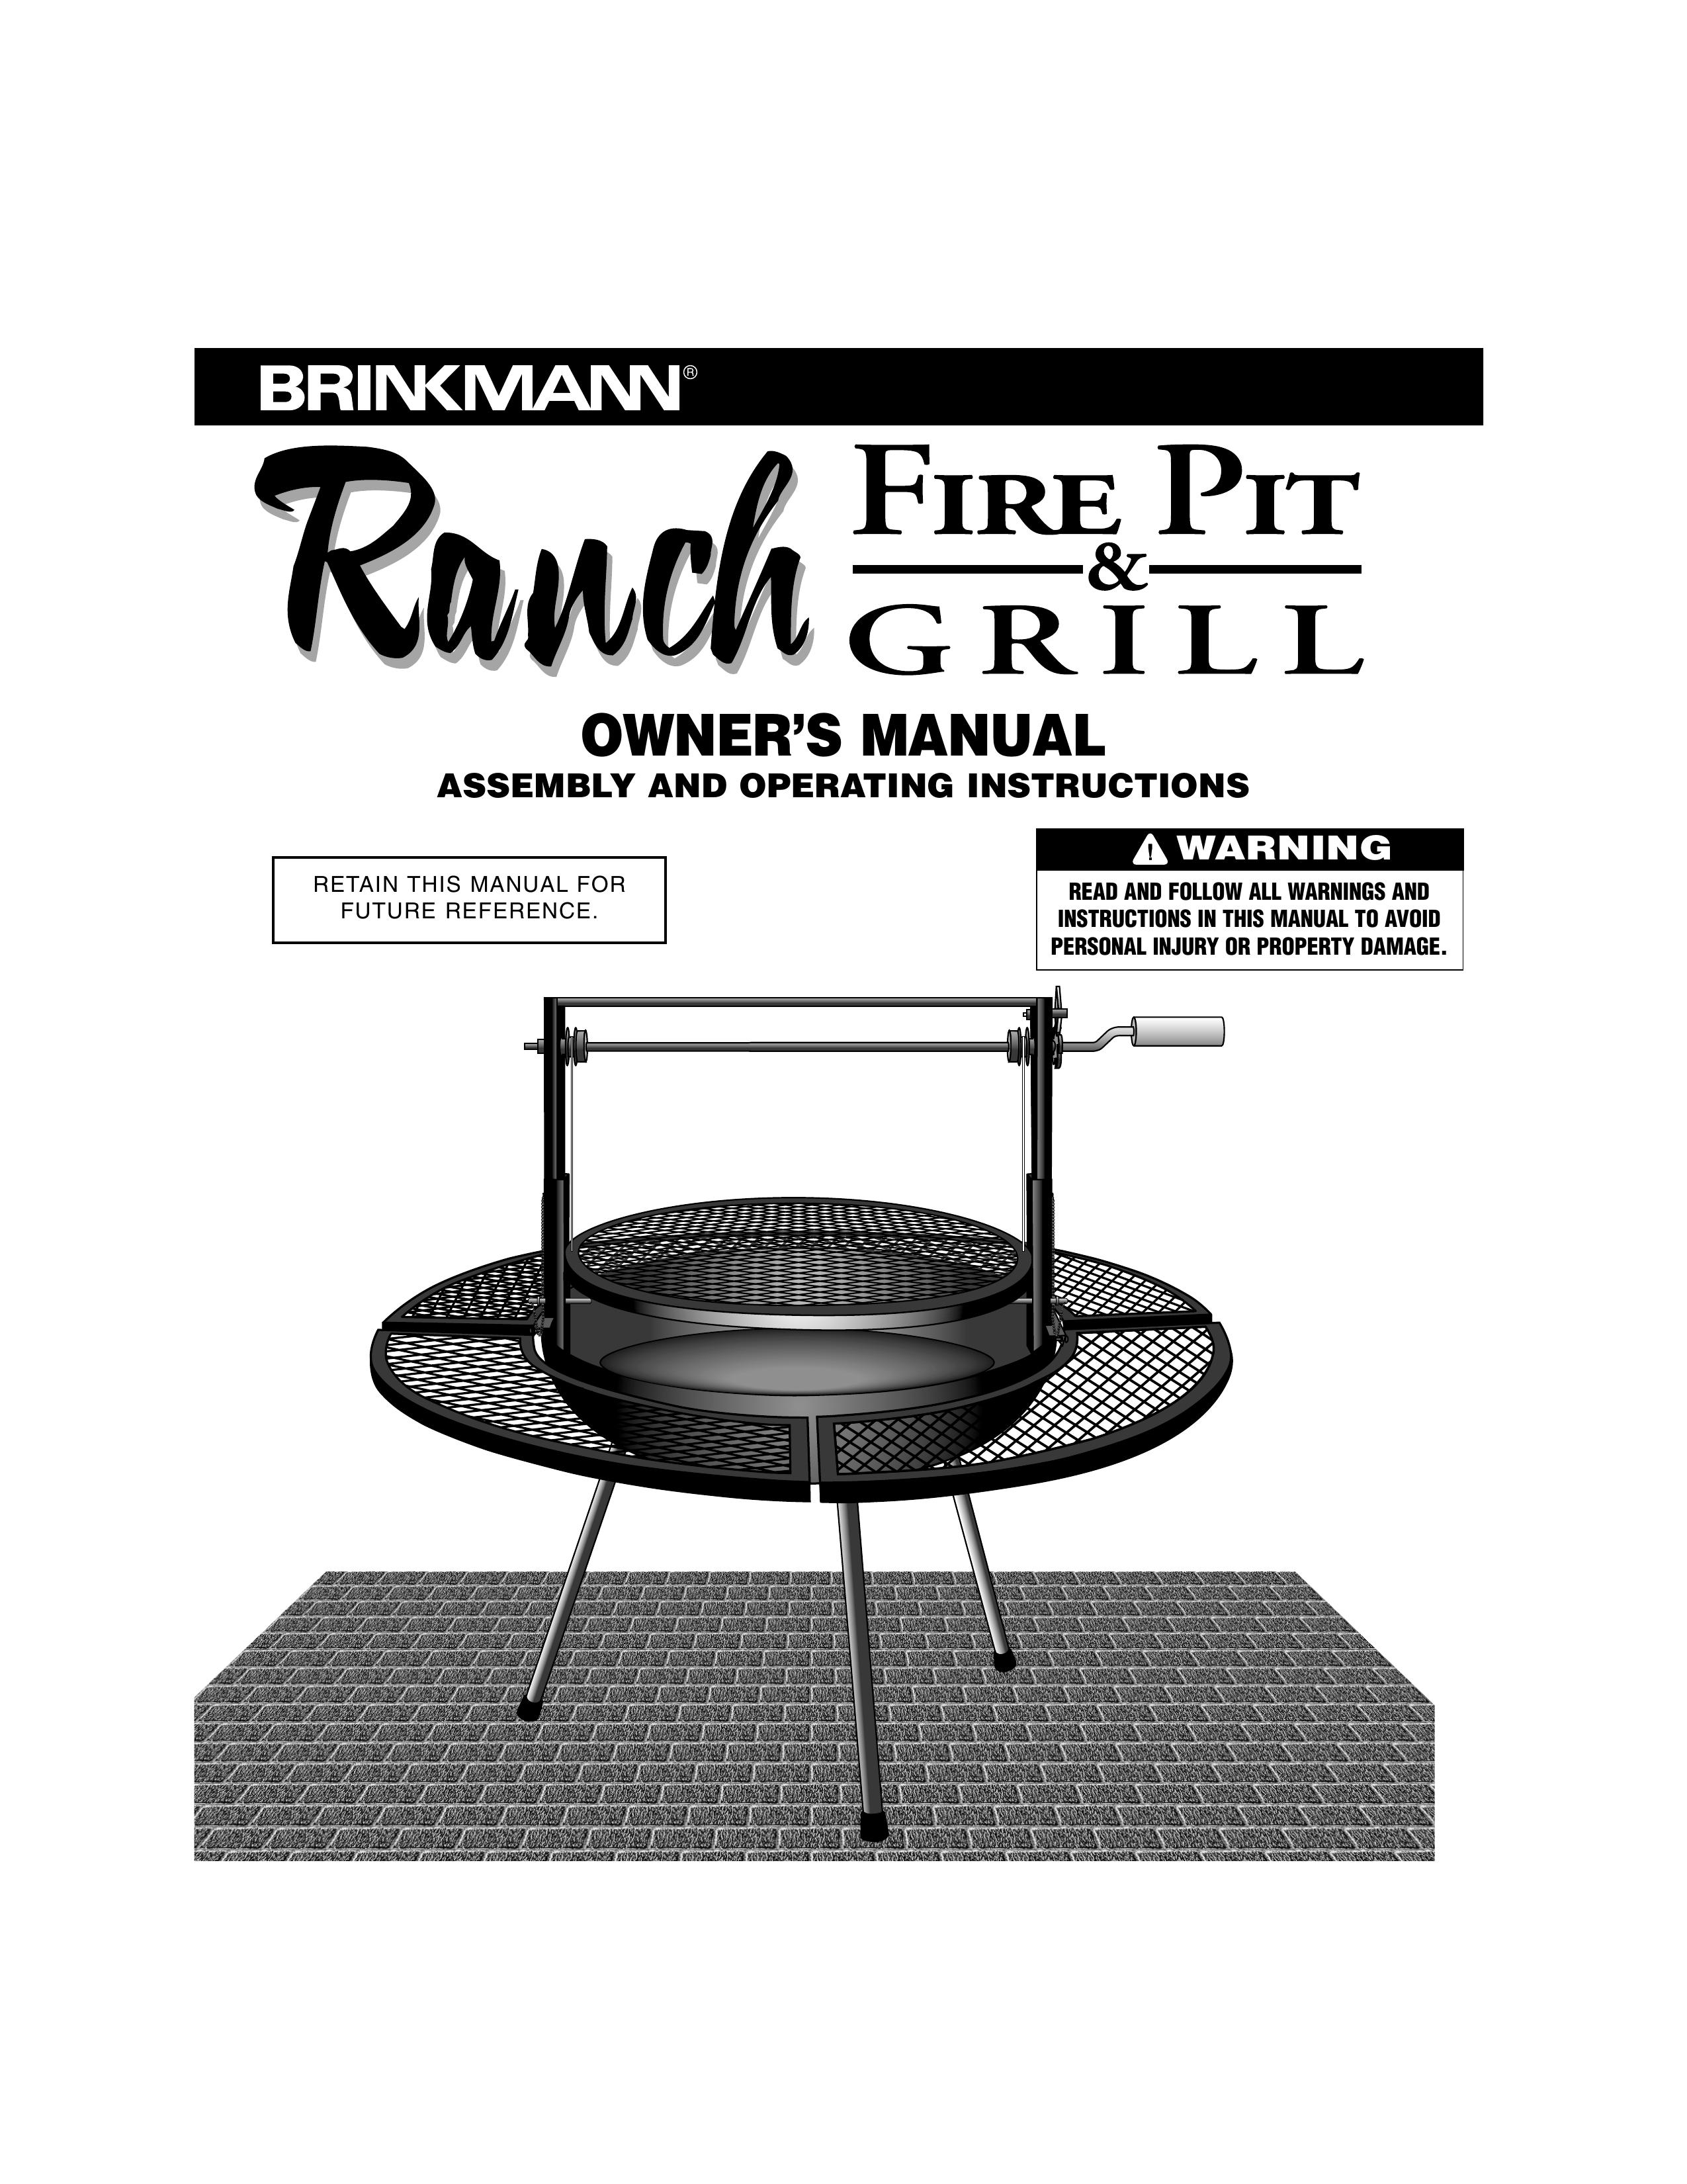 Brinkmann Fire Pit & Grill Fire Pit User Manual (Page 1)